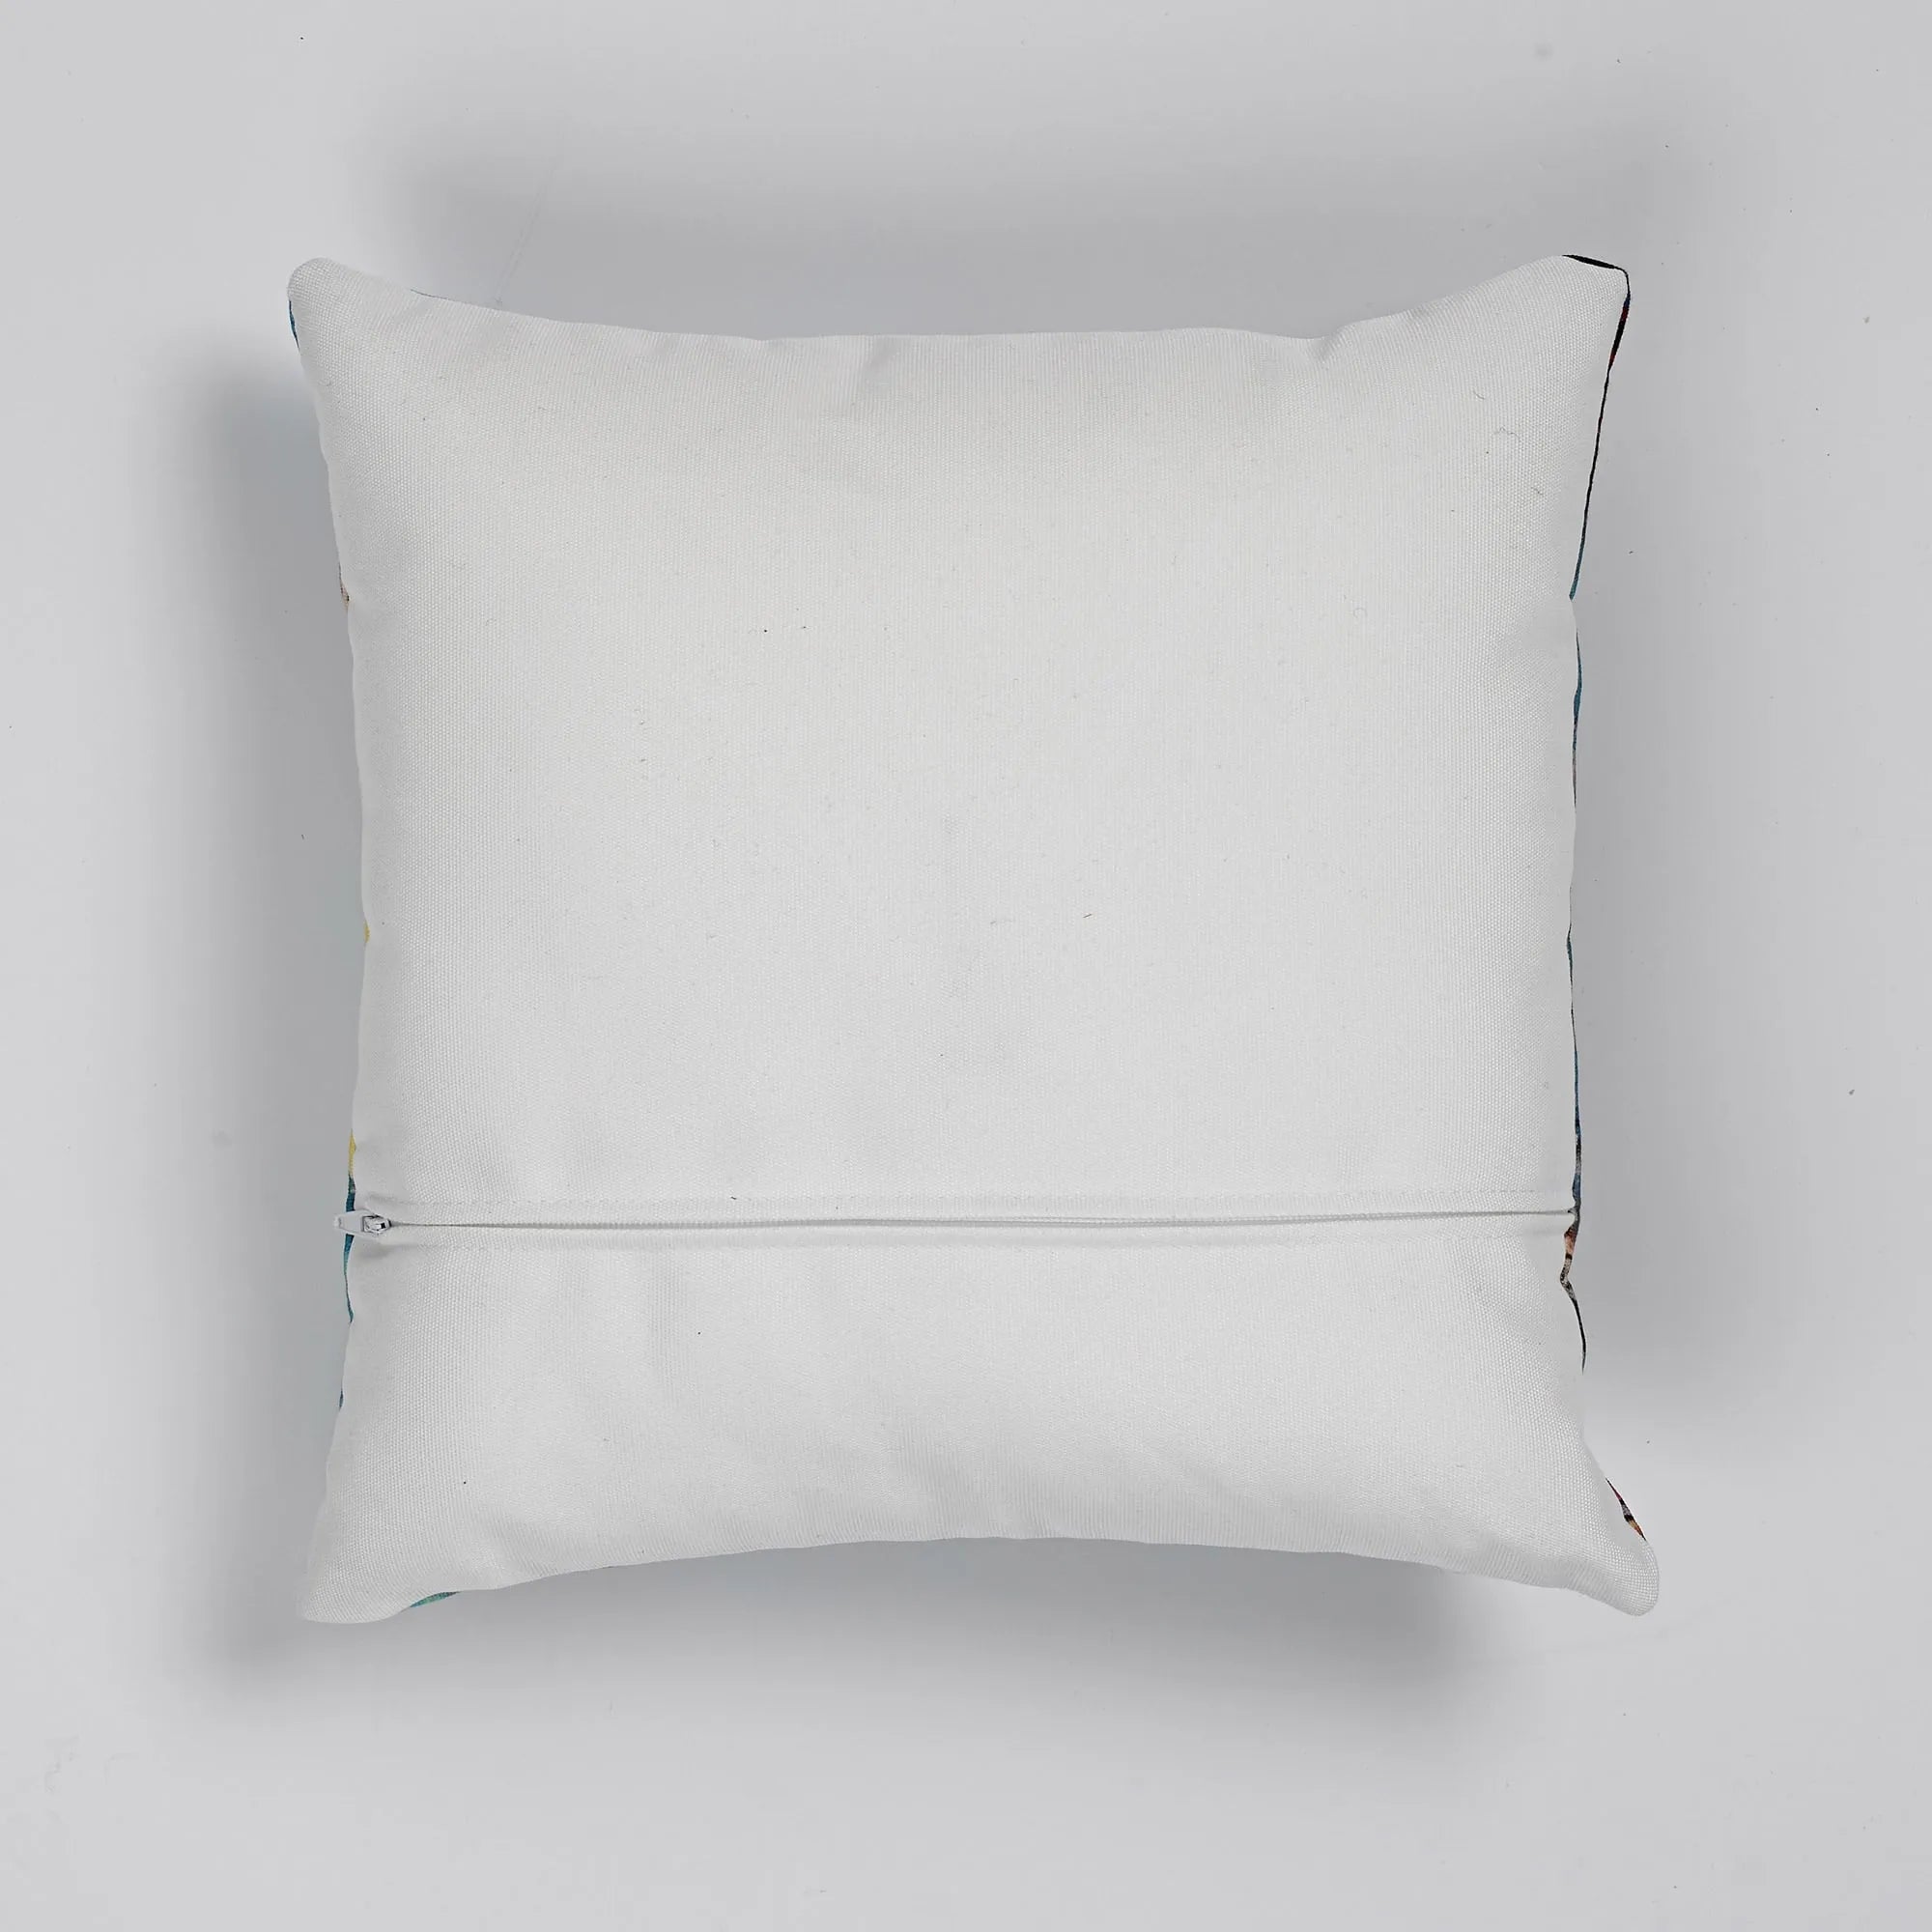 Flying High 3 Cushion - Decorative Throw Pillow - Throw Pillows - Aesthetic Art